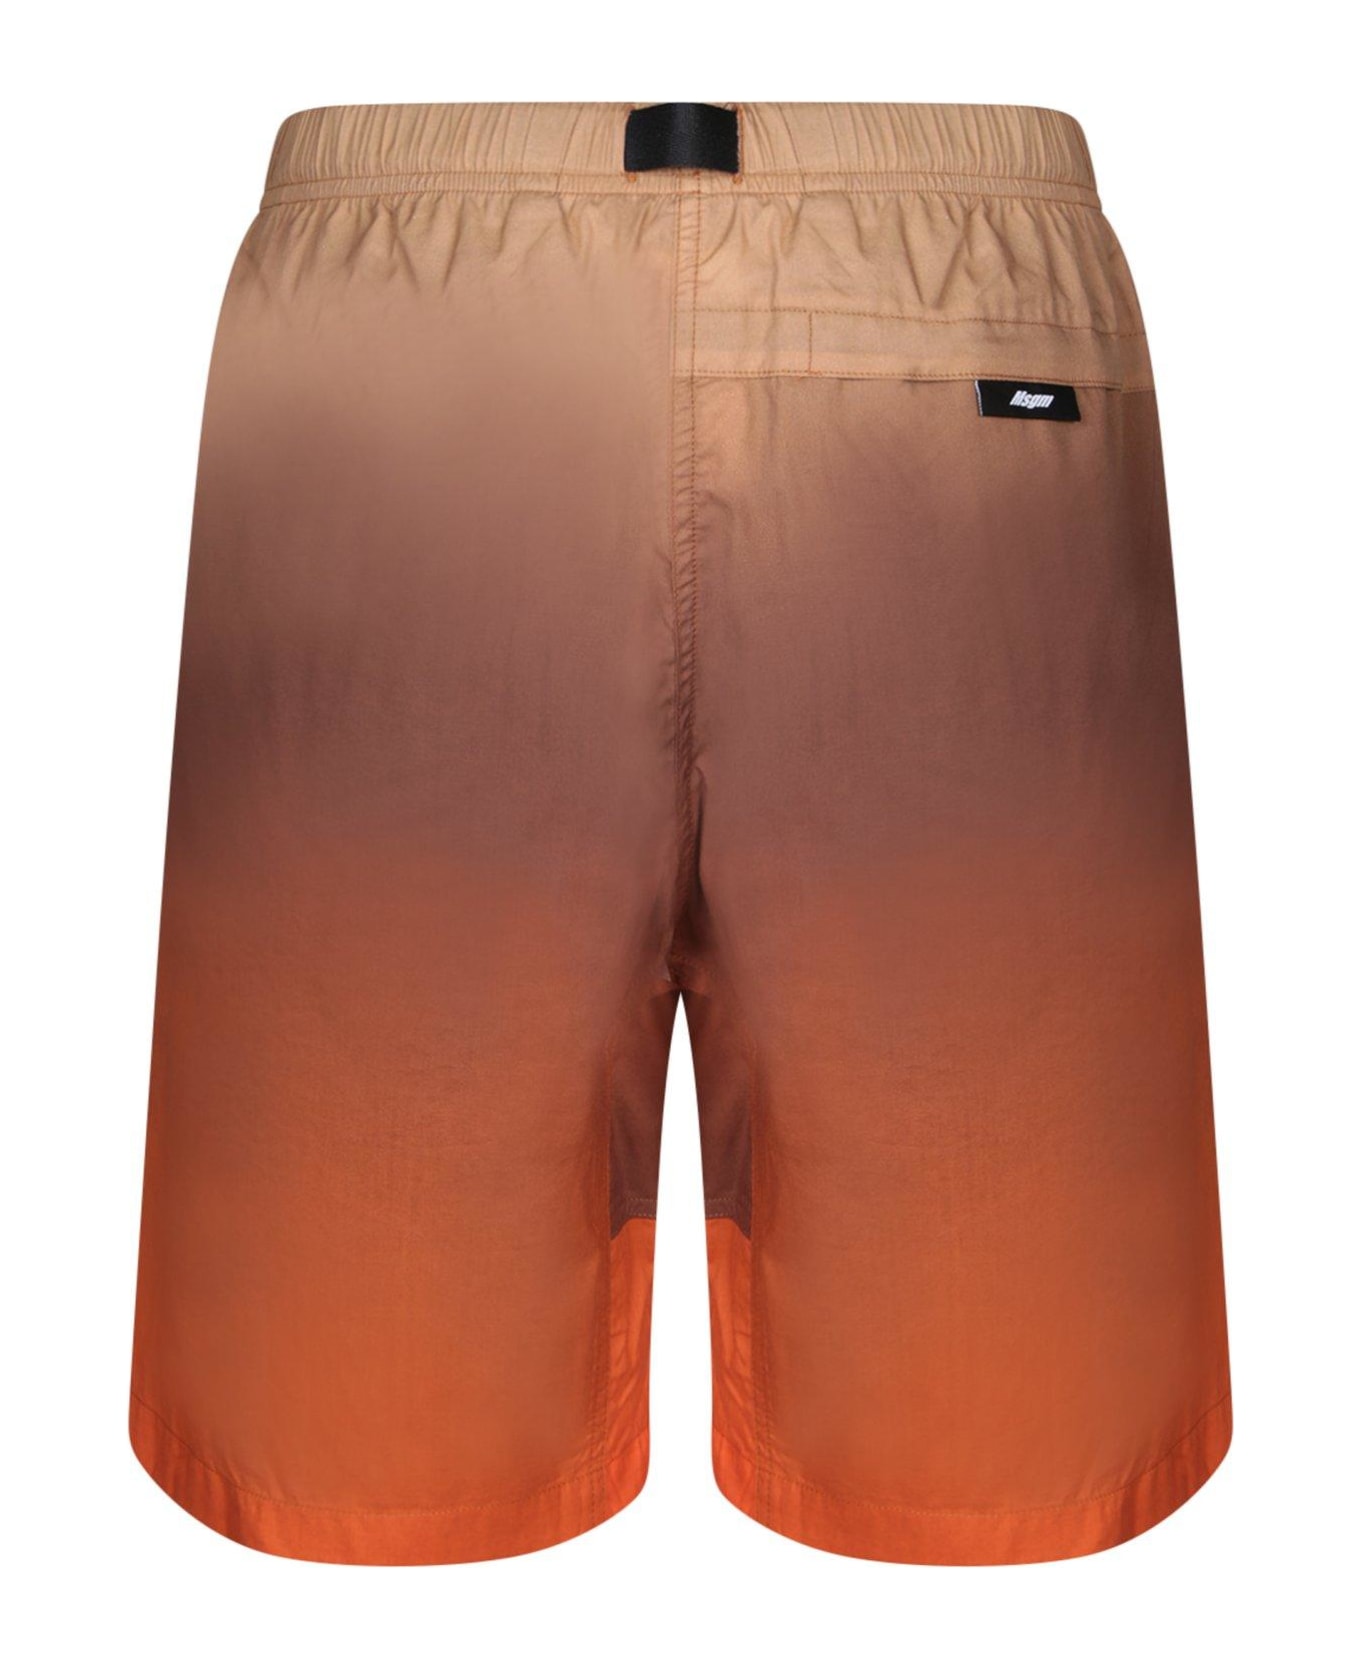 MSGM Gradient Effect Bermuda Shorts - Beige/orange